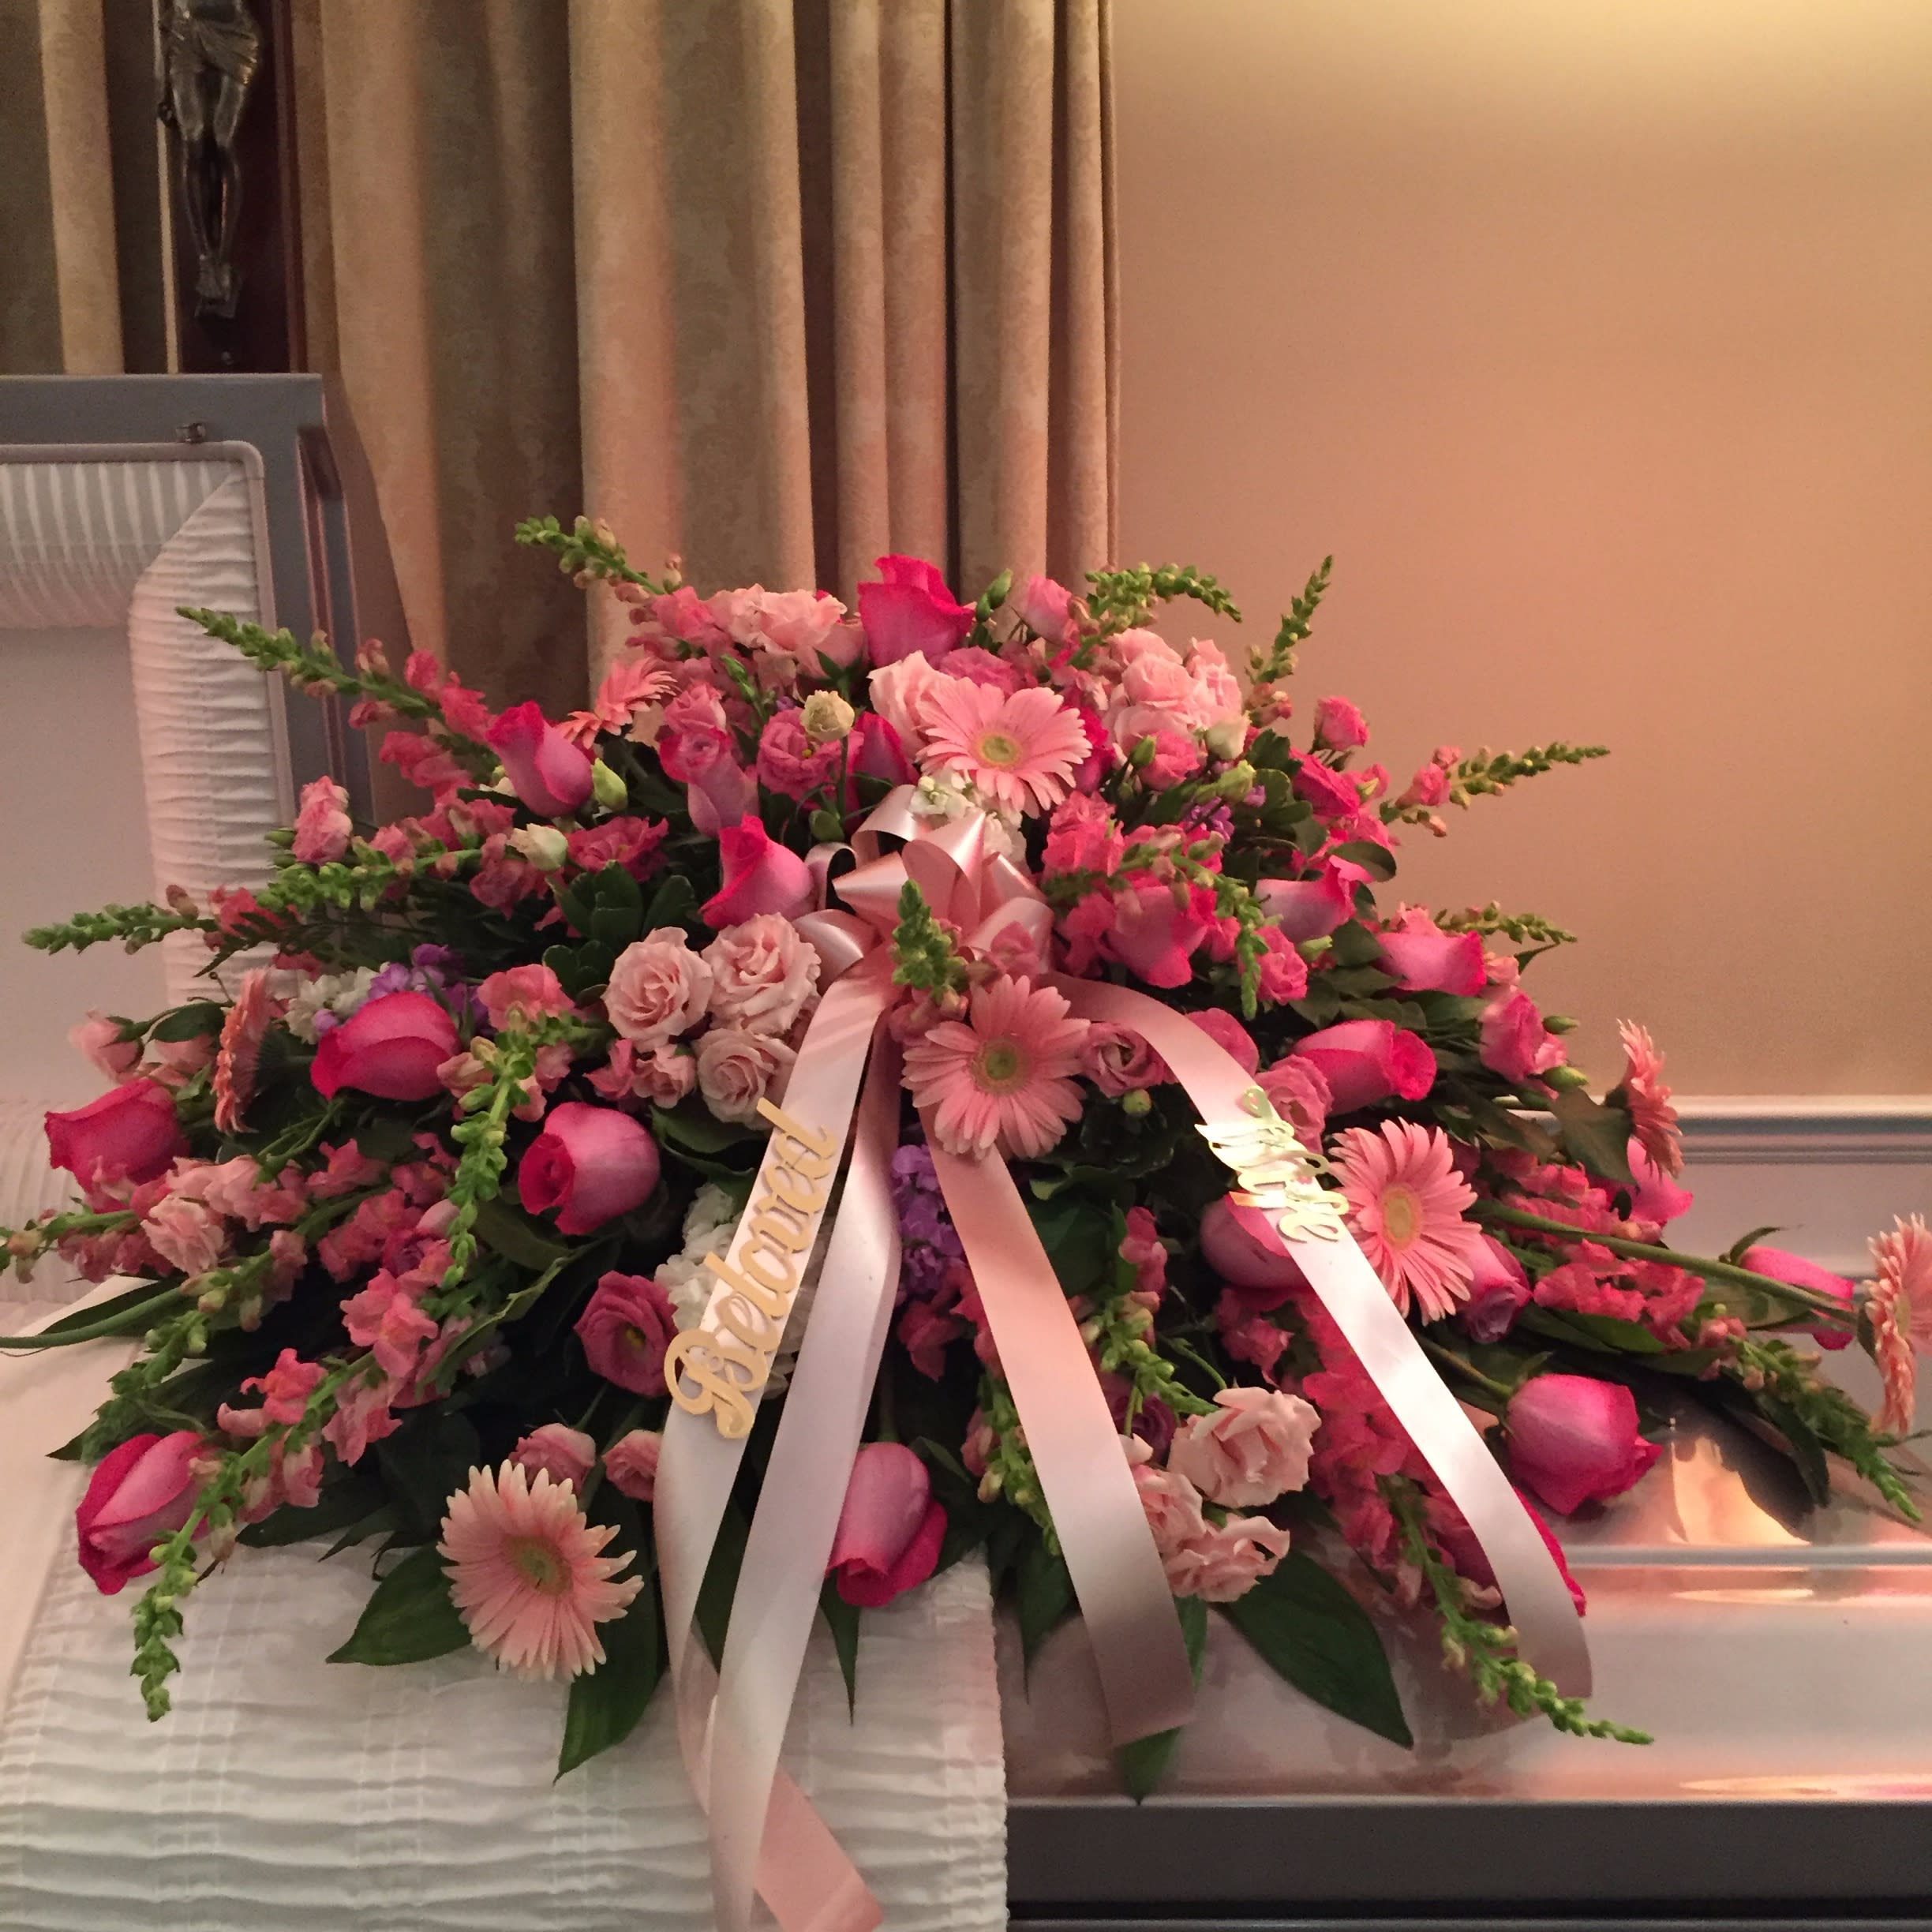 DELICATE PINK SPRAY Funeral Arrangement in Haddon Heights, NJ - Freshest  Flowers